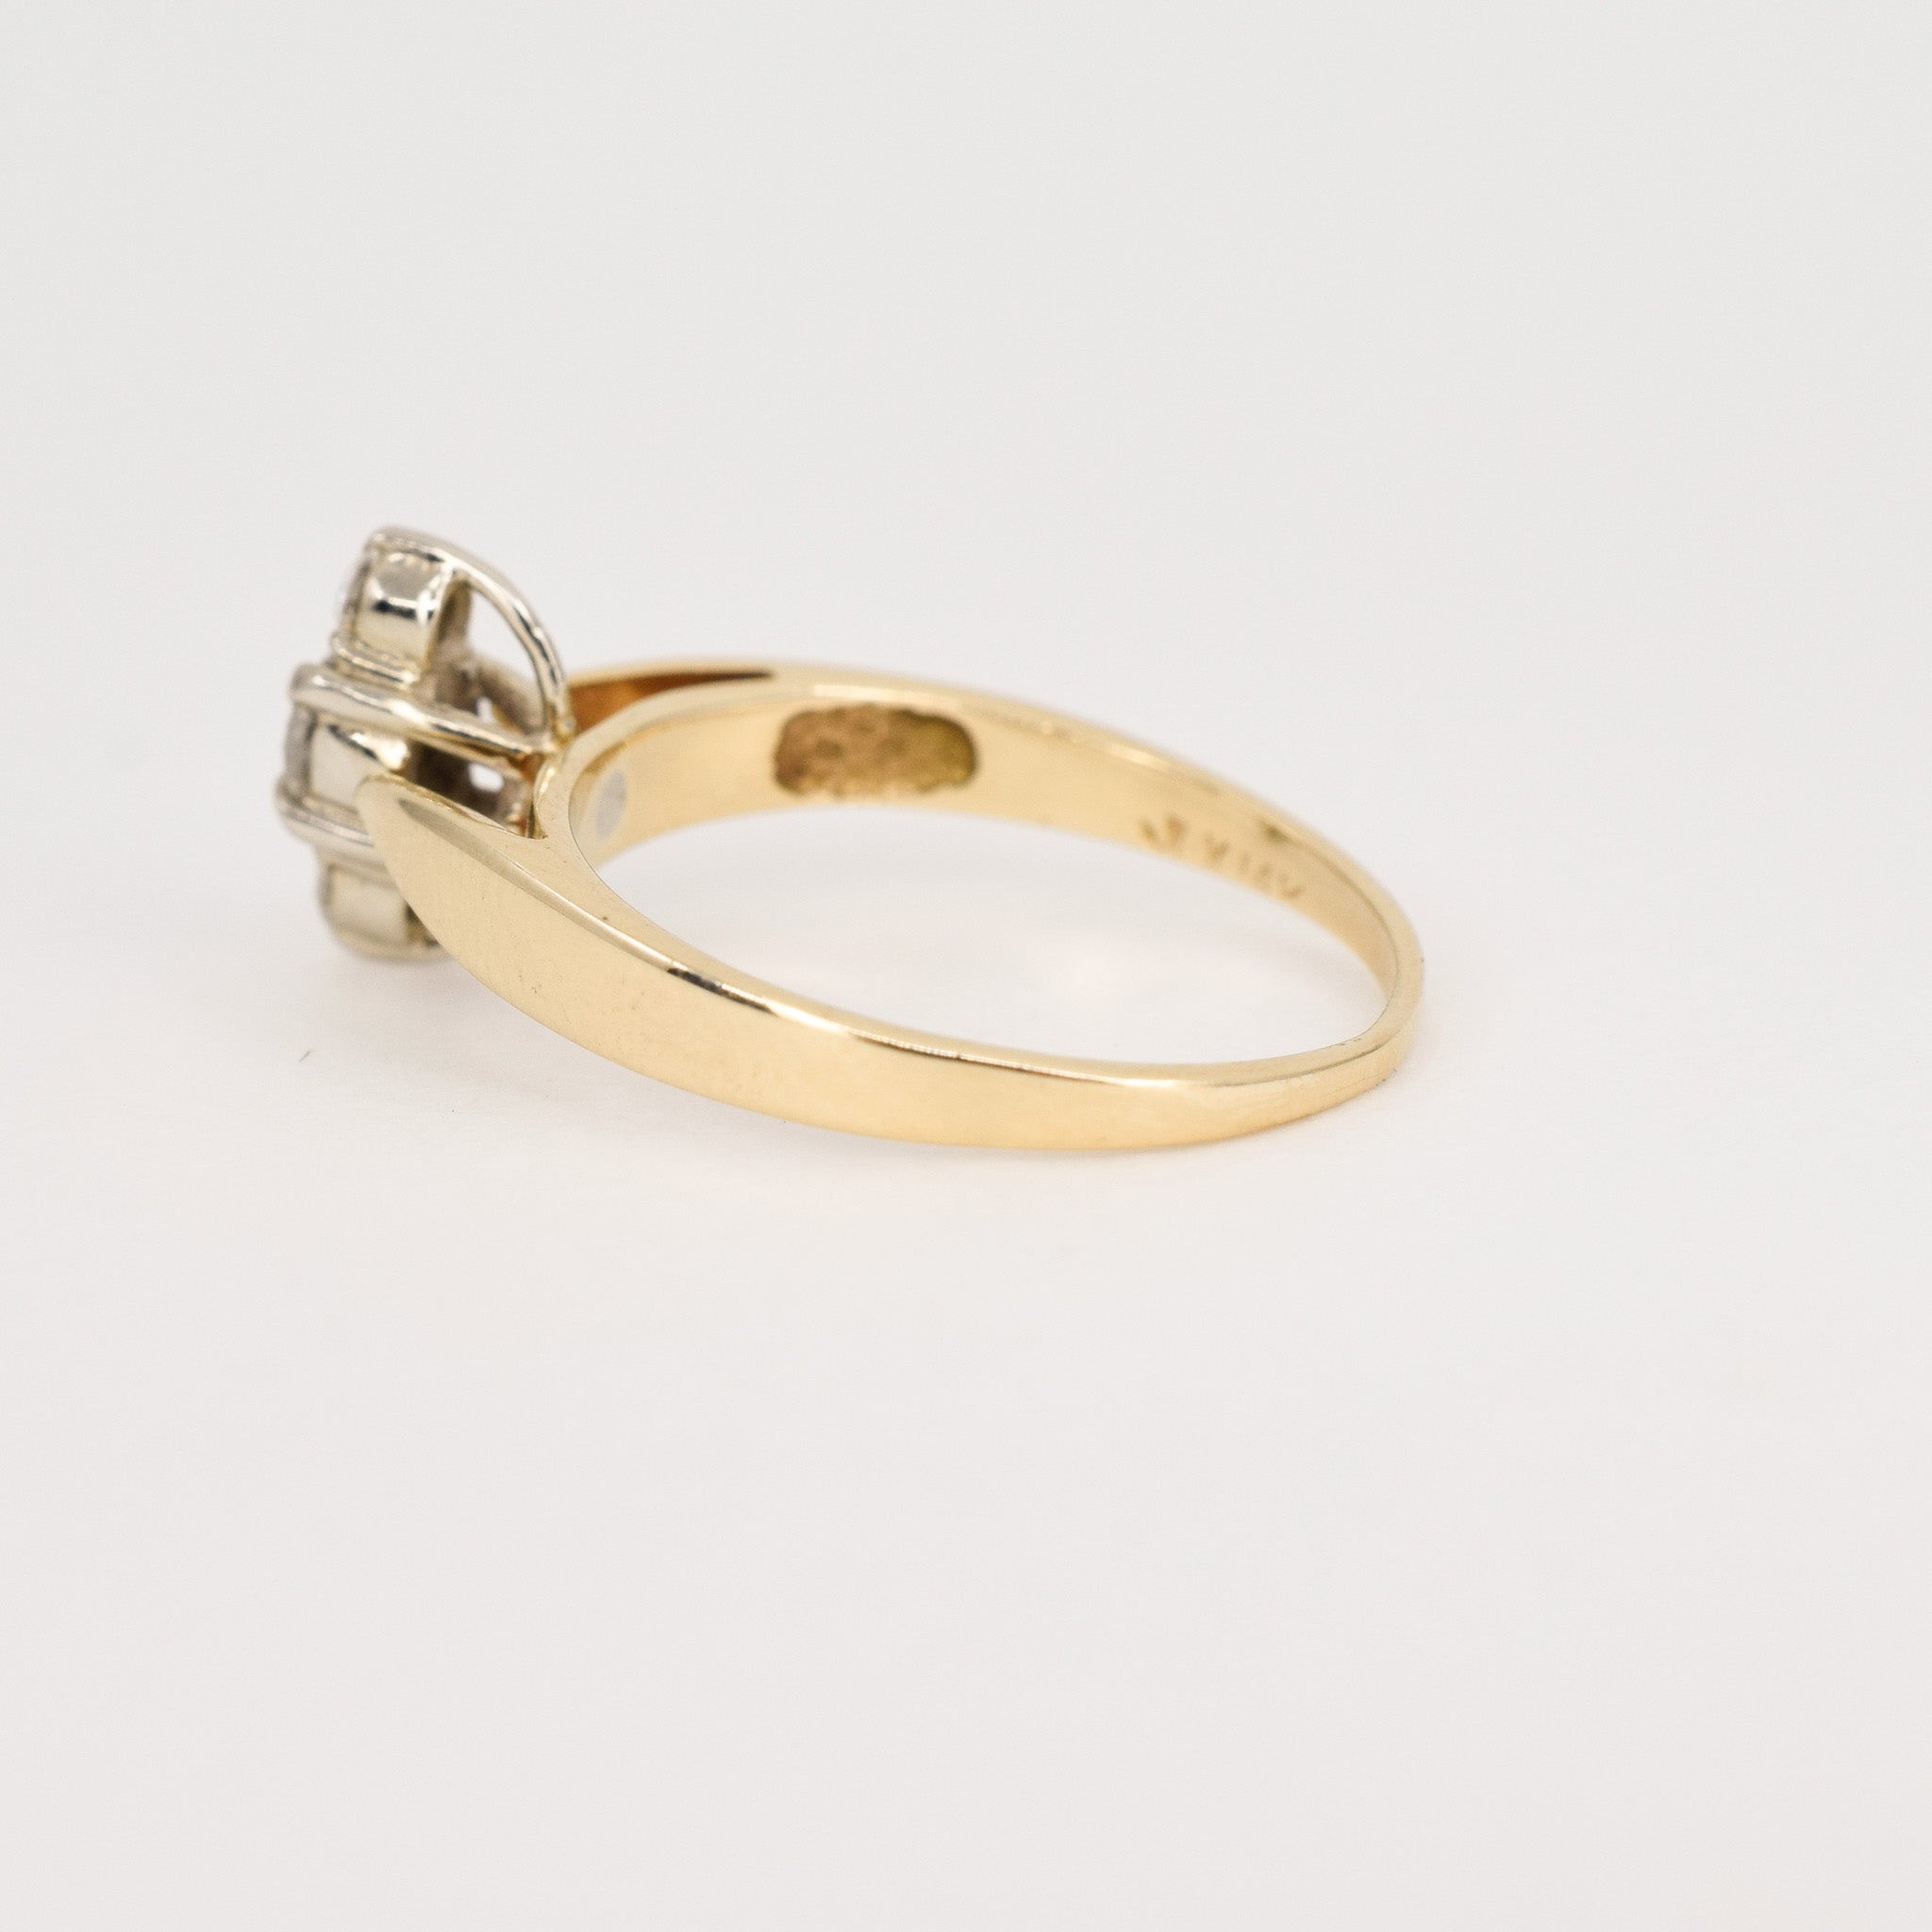 vintage diamond trilogy ring, folklor vintage jewelry canada